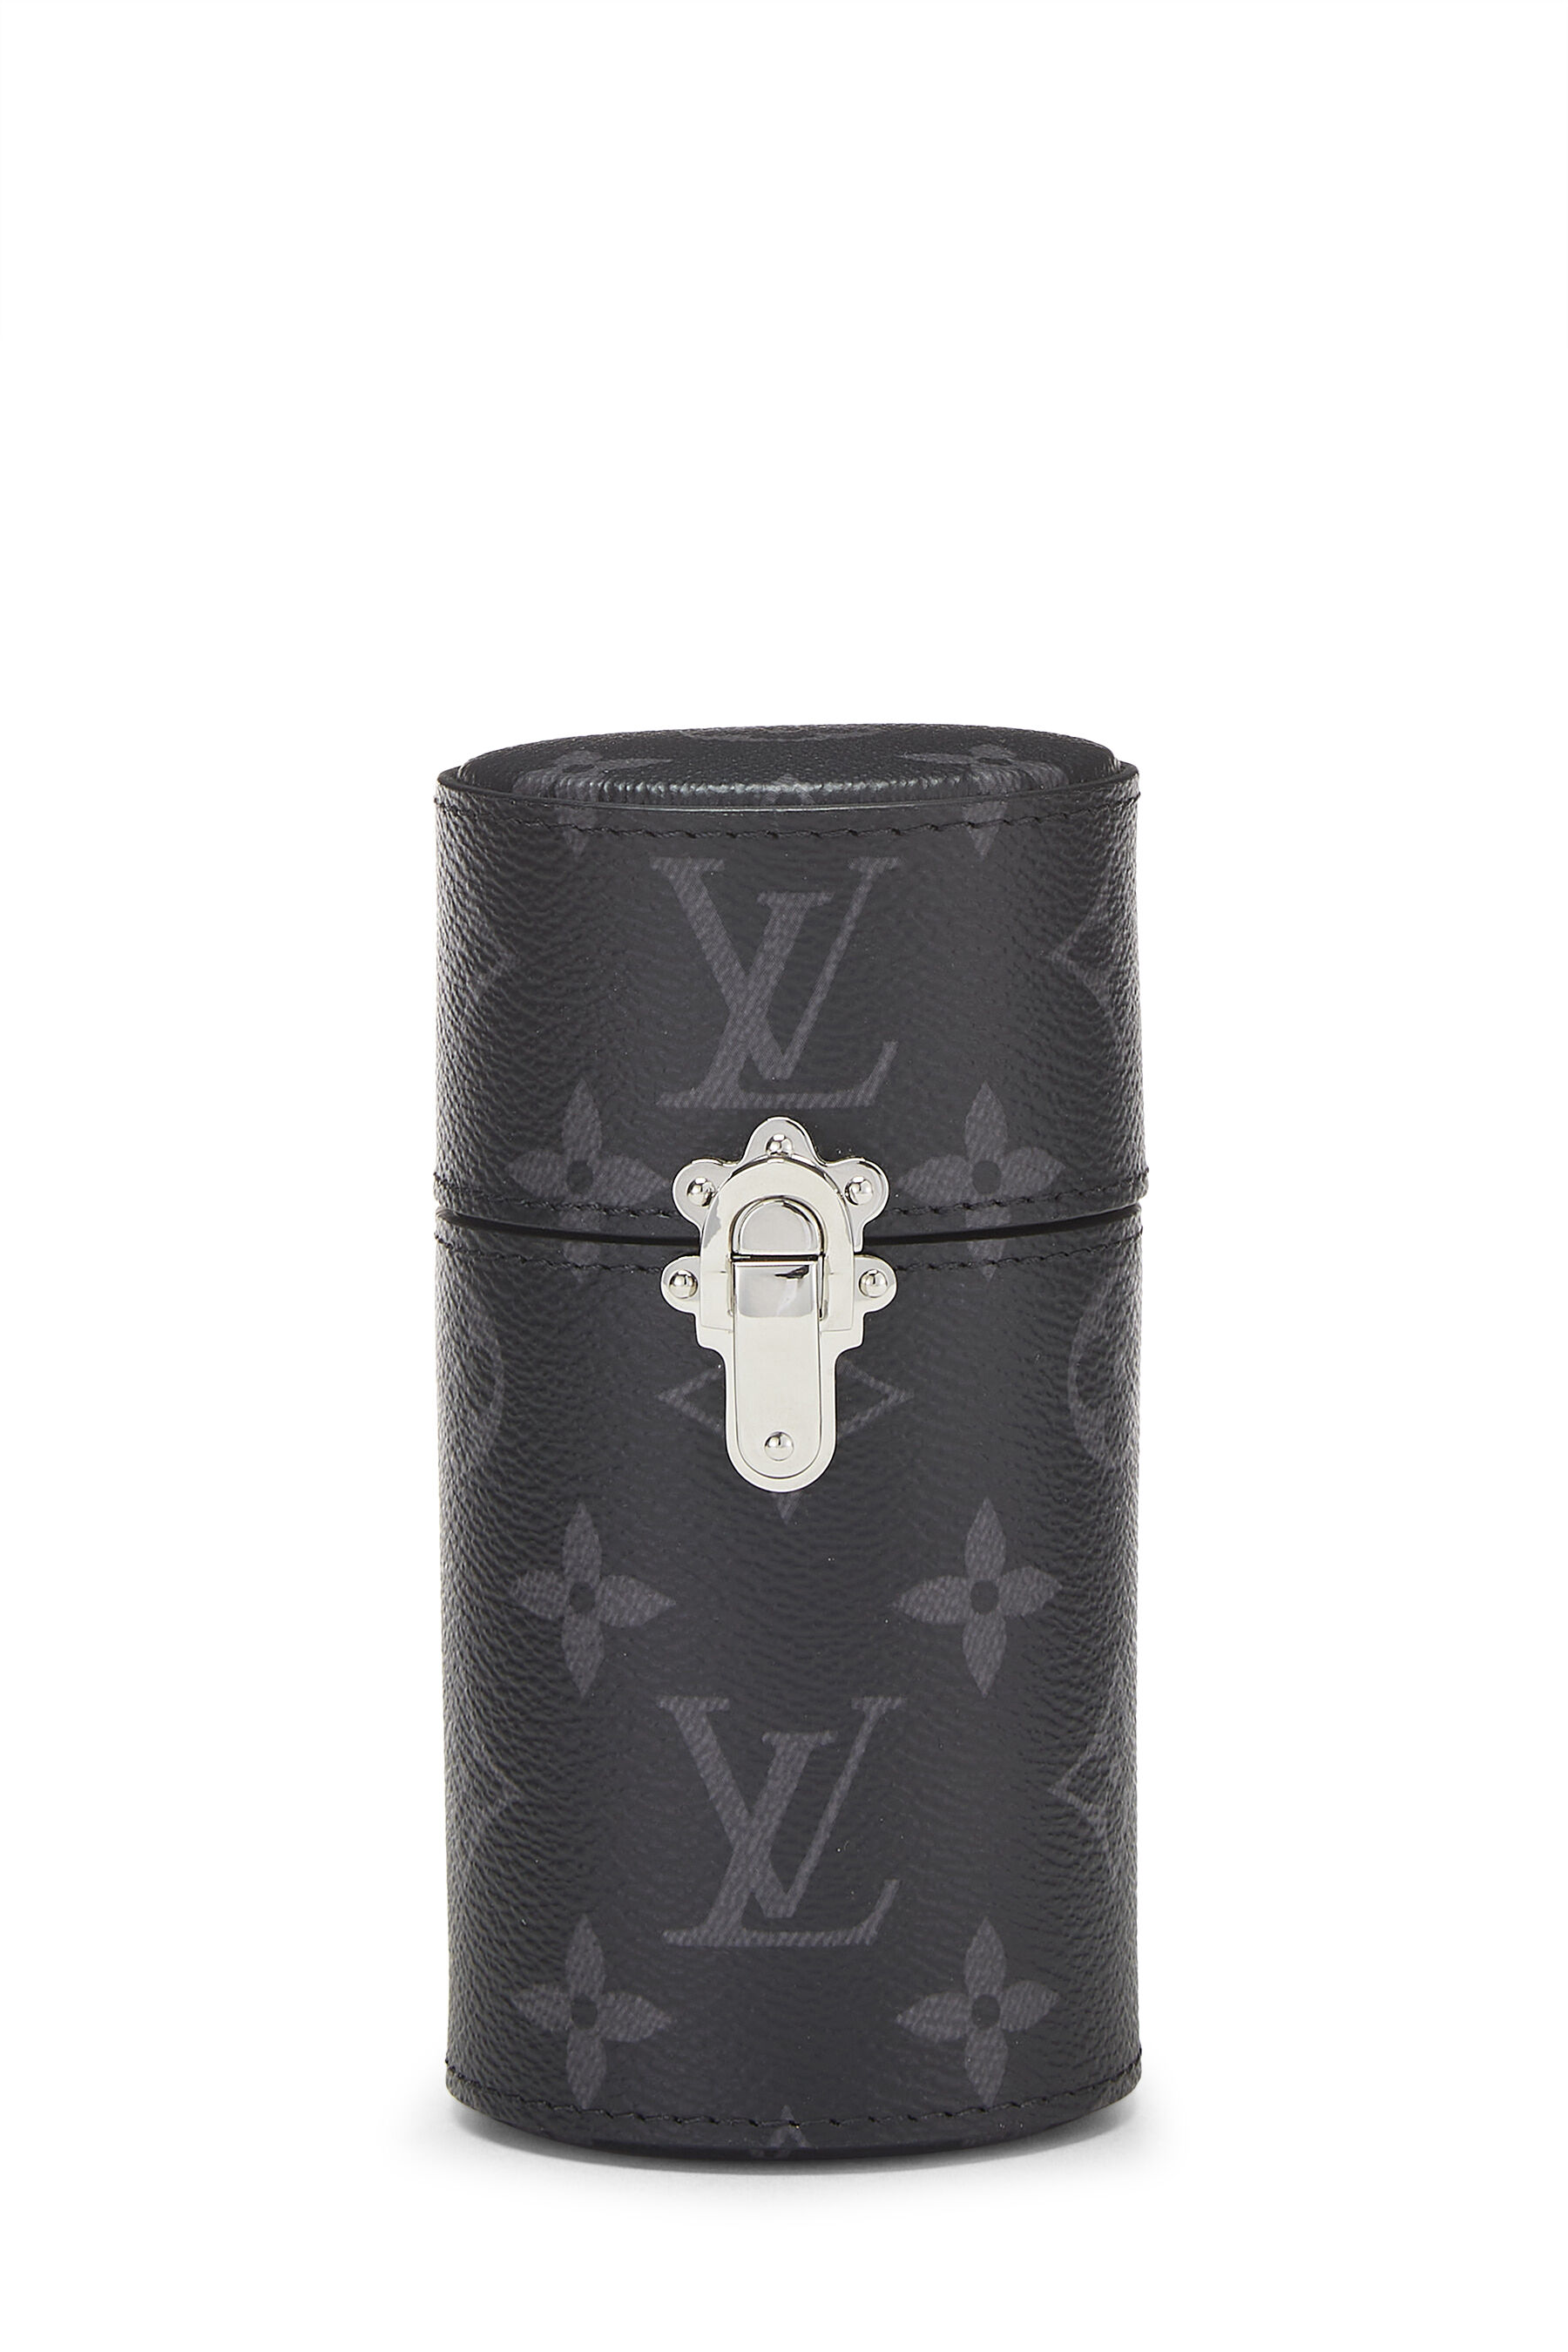 Louis Vuitton Perfume Leather Travel Cases